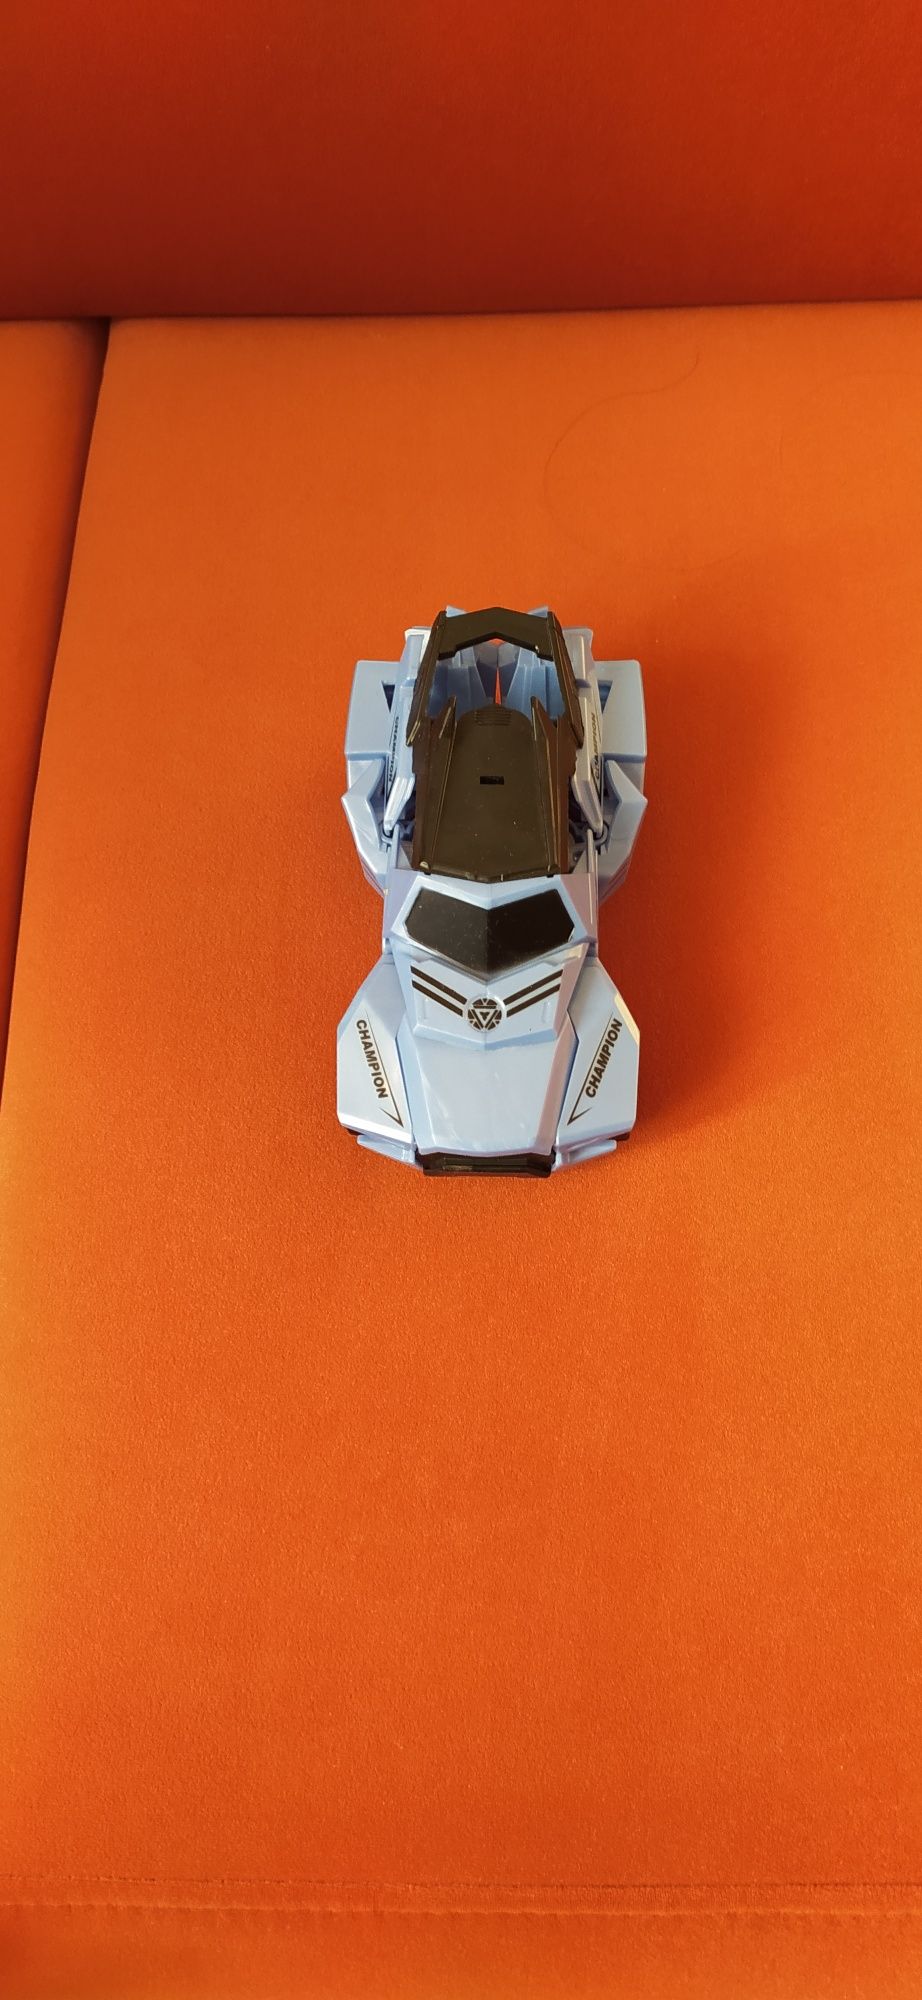 Transformers samochód - robot